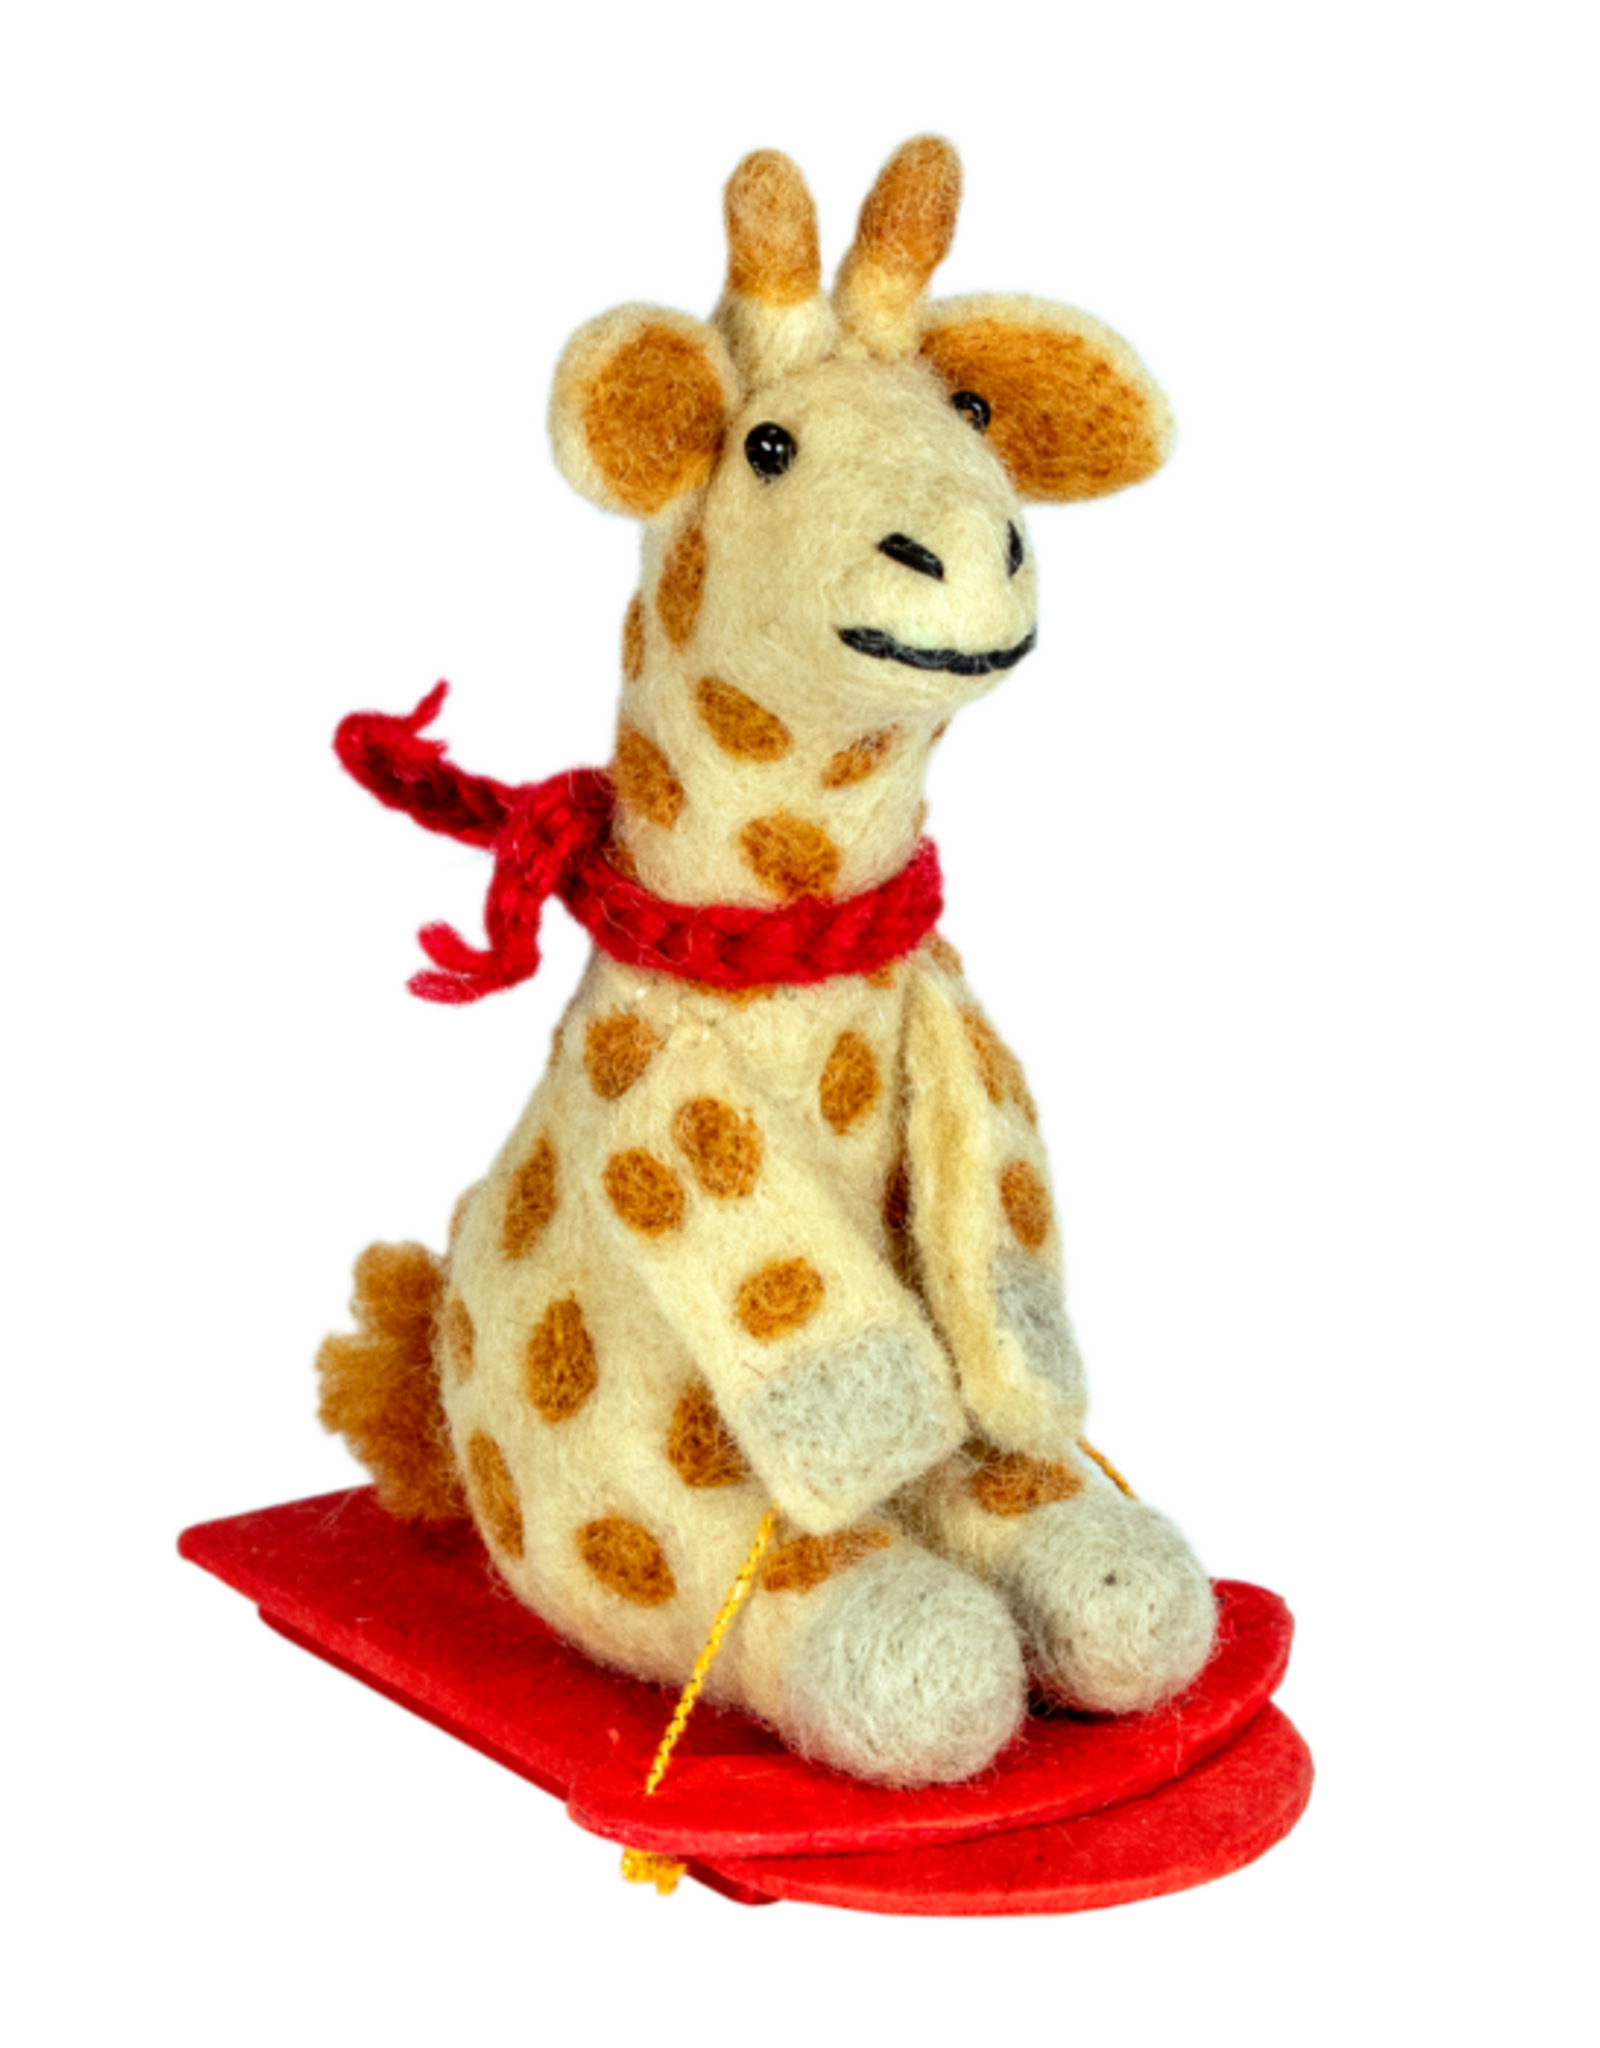 dZi Handmade Sledding Giraffe Ornament